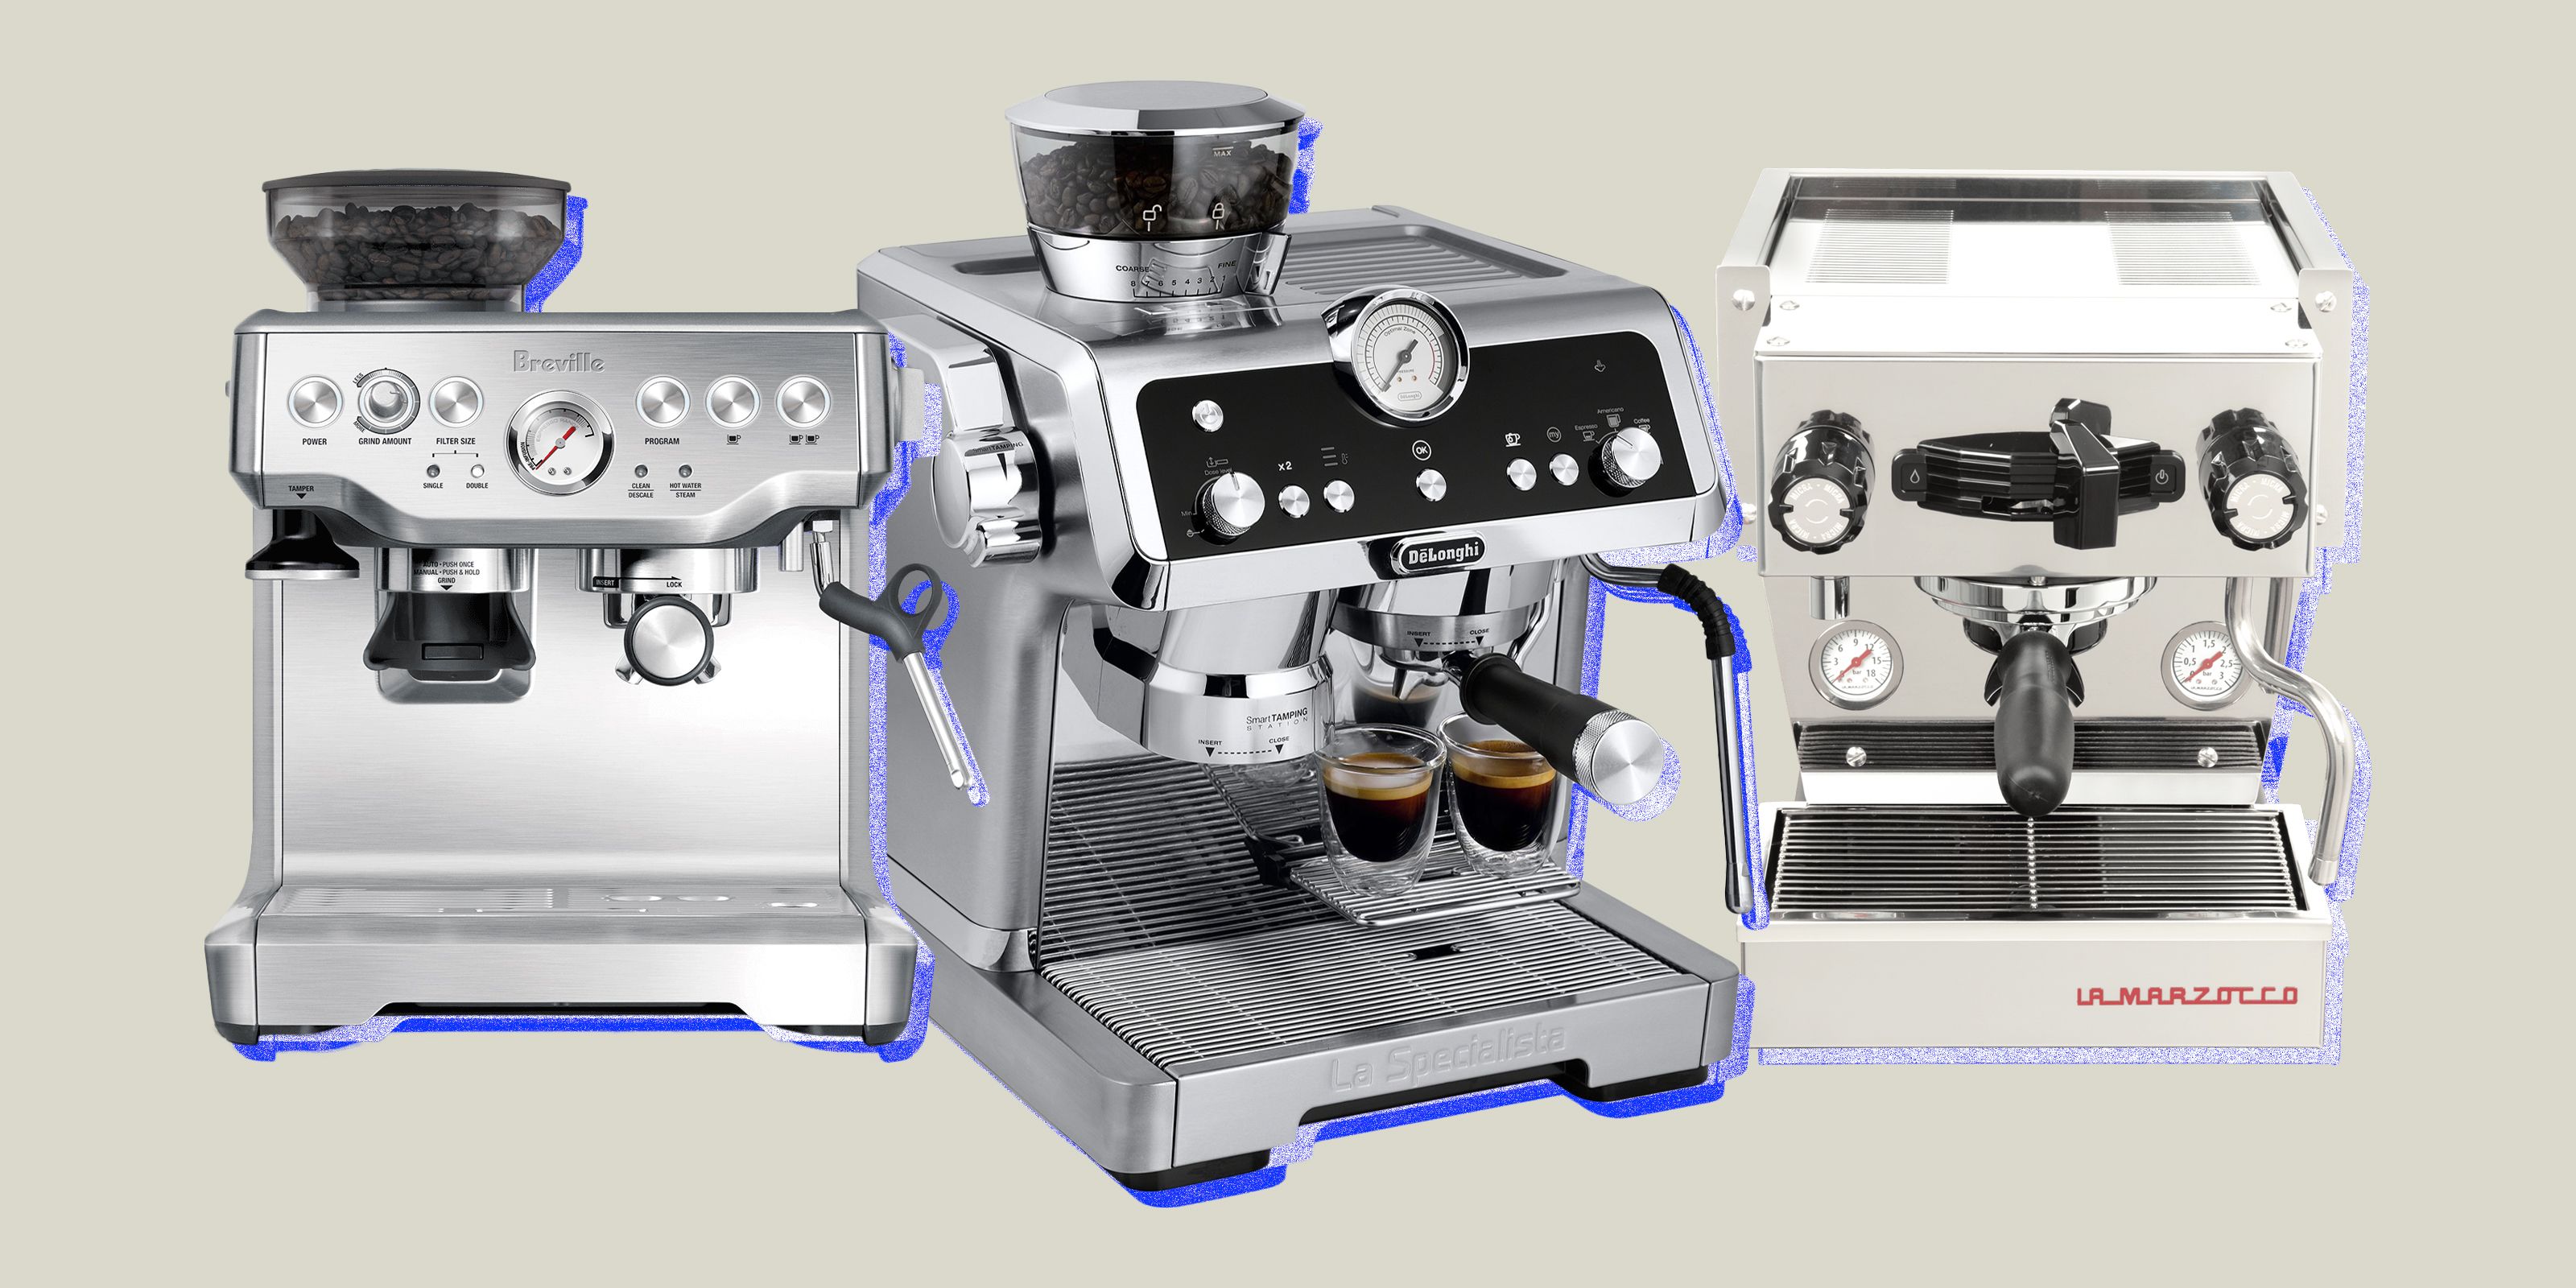 Manual coffee machine Vs automatic coffee machine (Pros and Cons